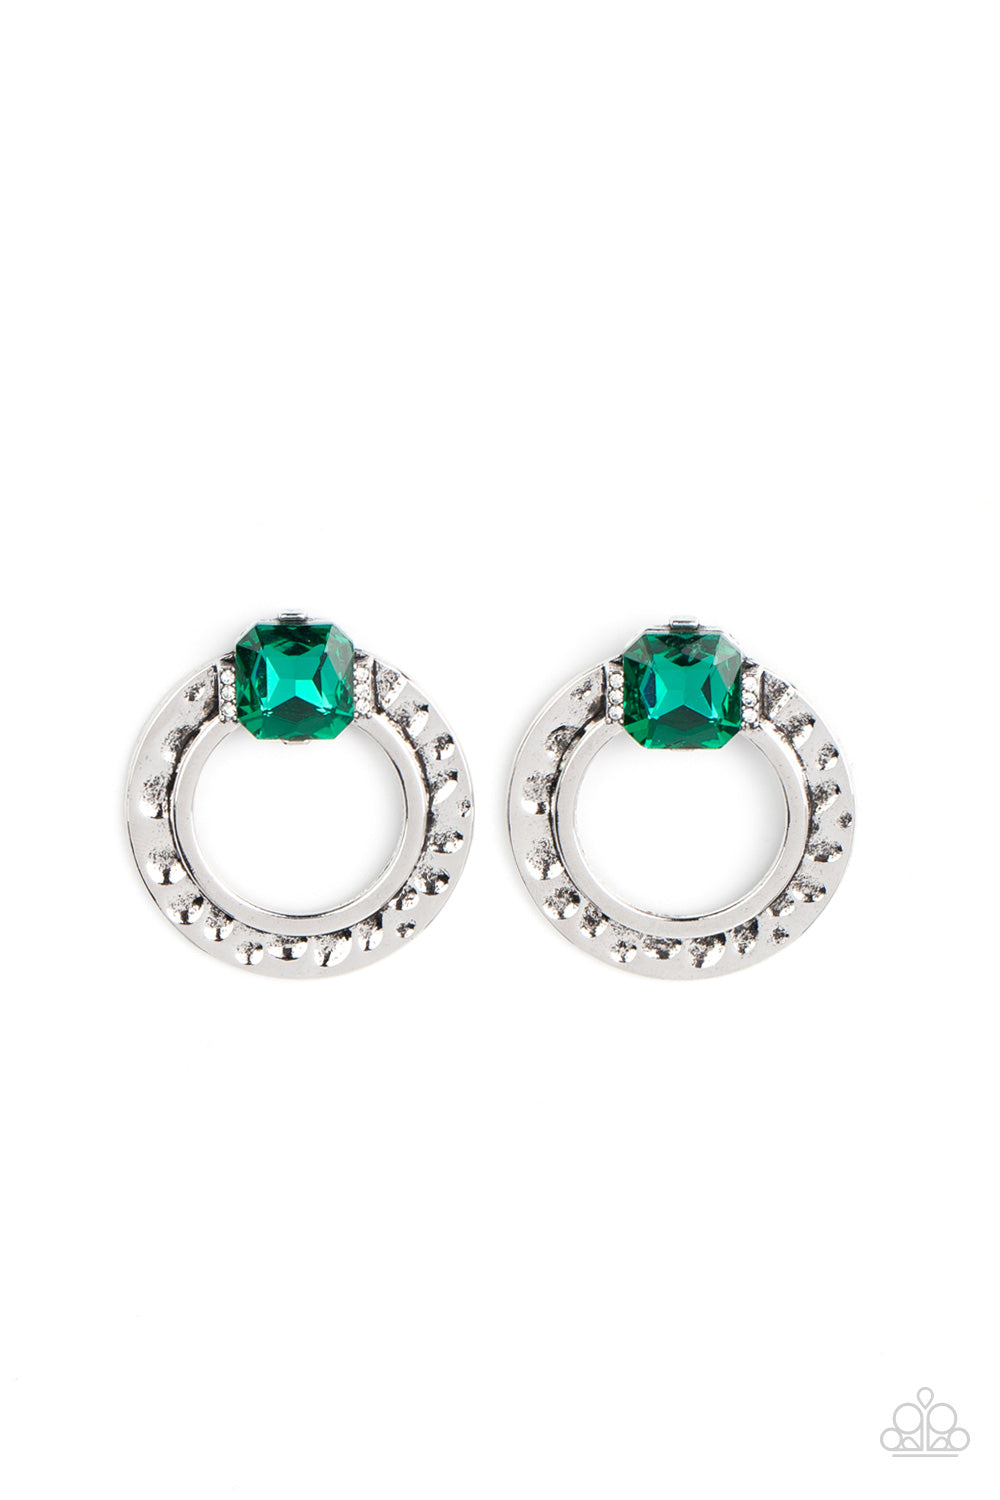 Smoldering Scintillation - green - Paparazzi earrings